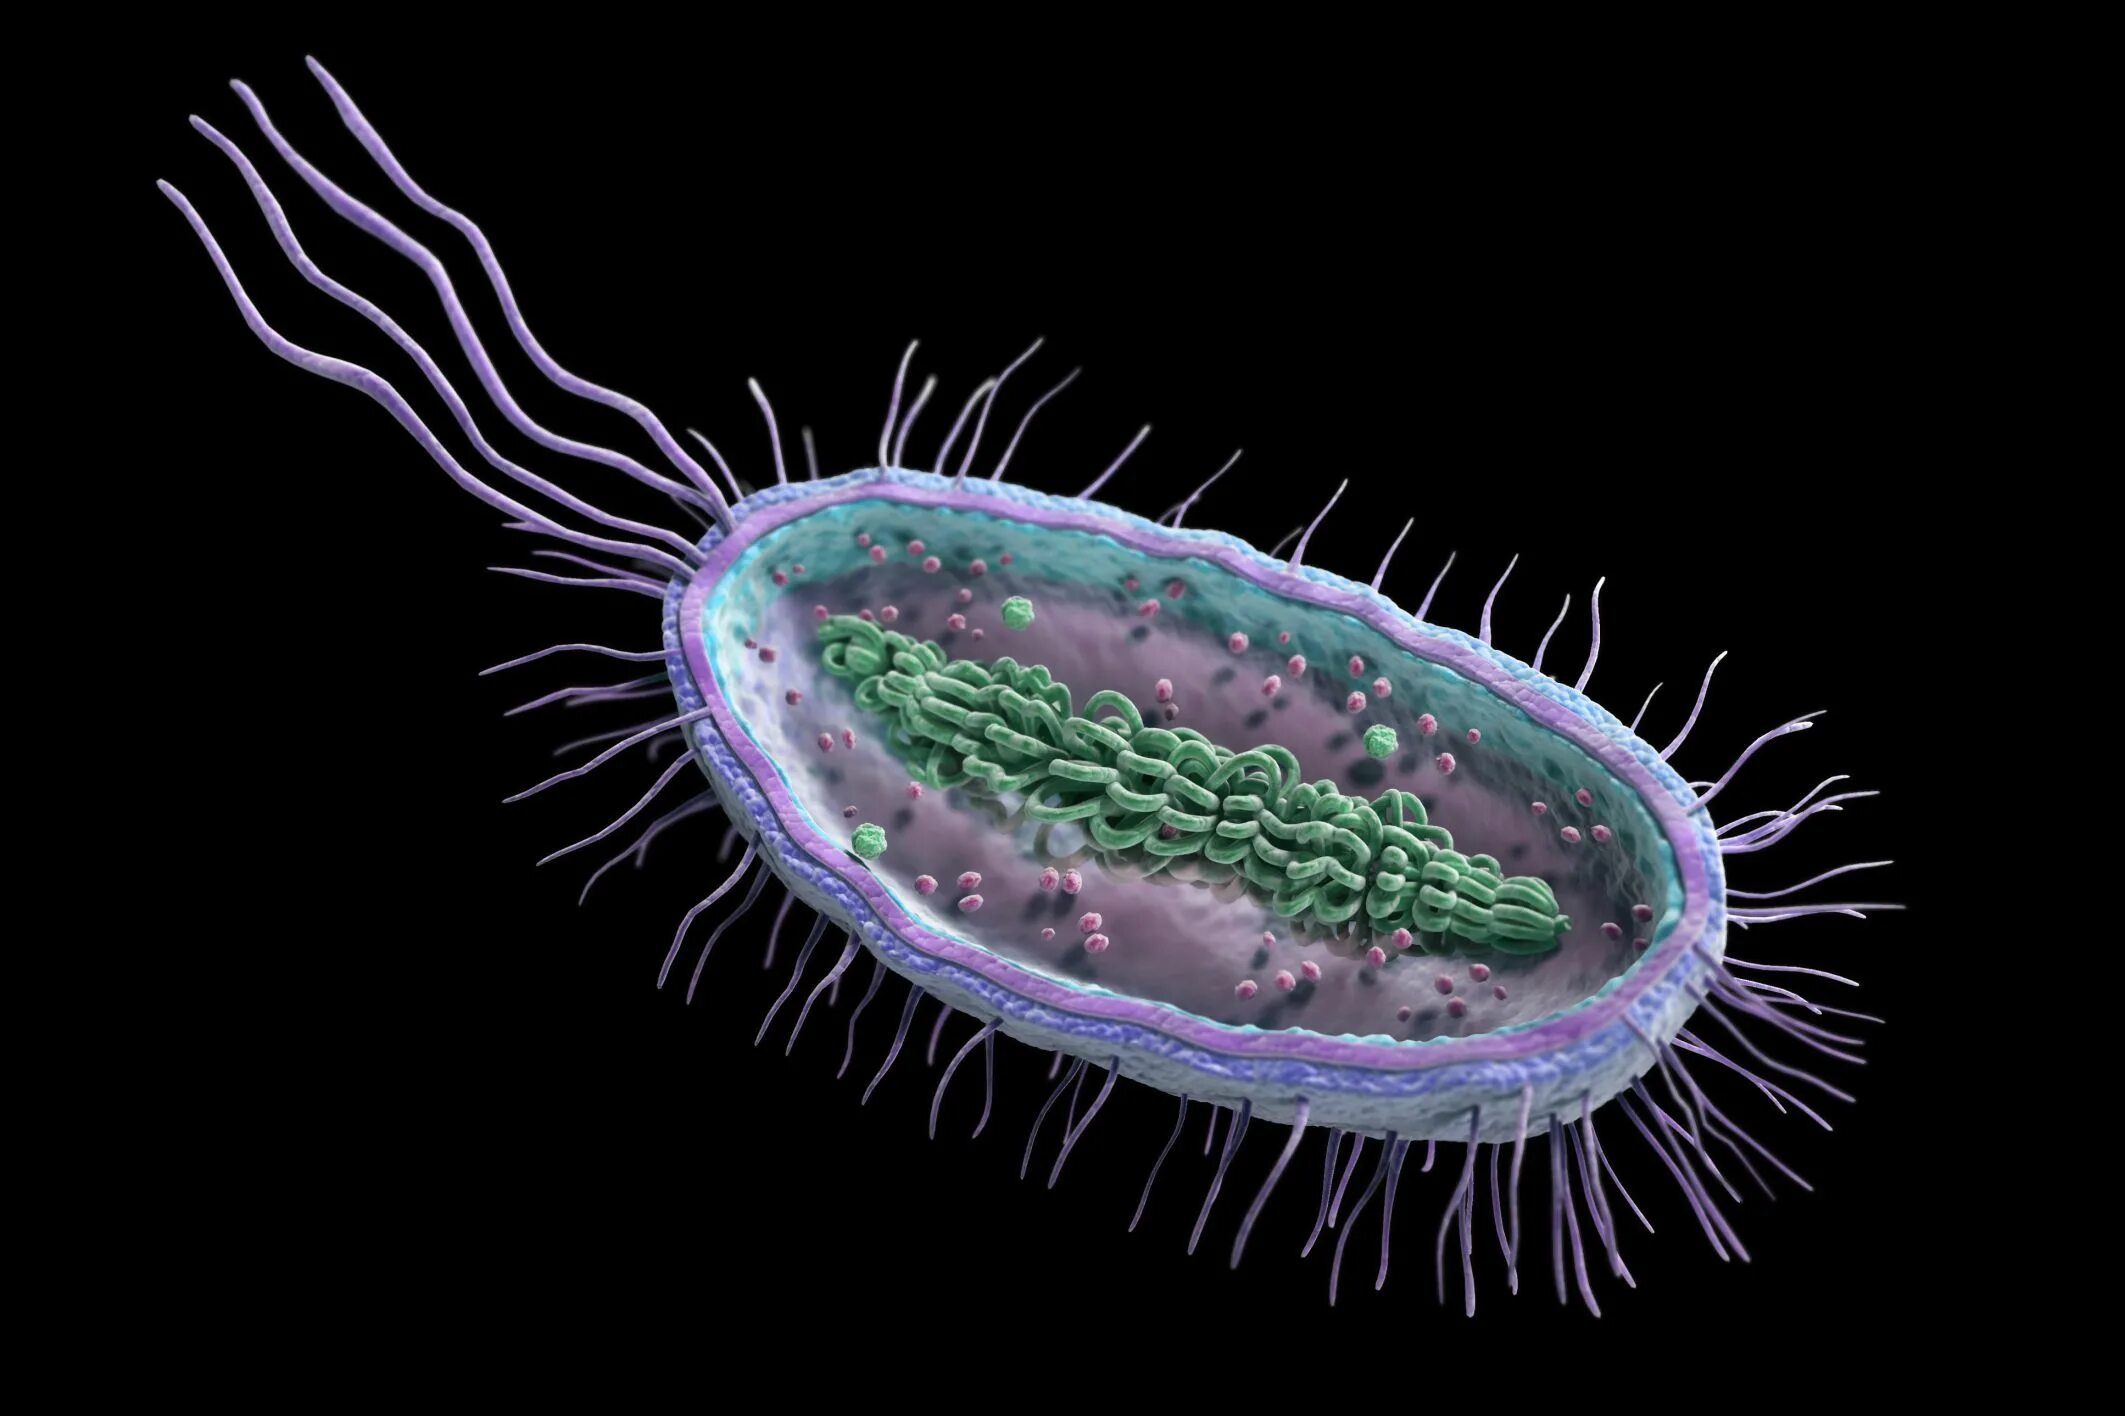 Бактерии эукариотические организмы. Бактерии прокариоты. Прокариотическая клетка в микроскопе. Клетка бактерии прокариоты. Одноклеточный микроорганизм прокариоты.